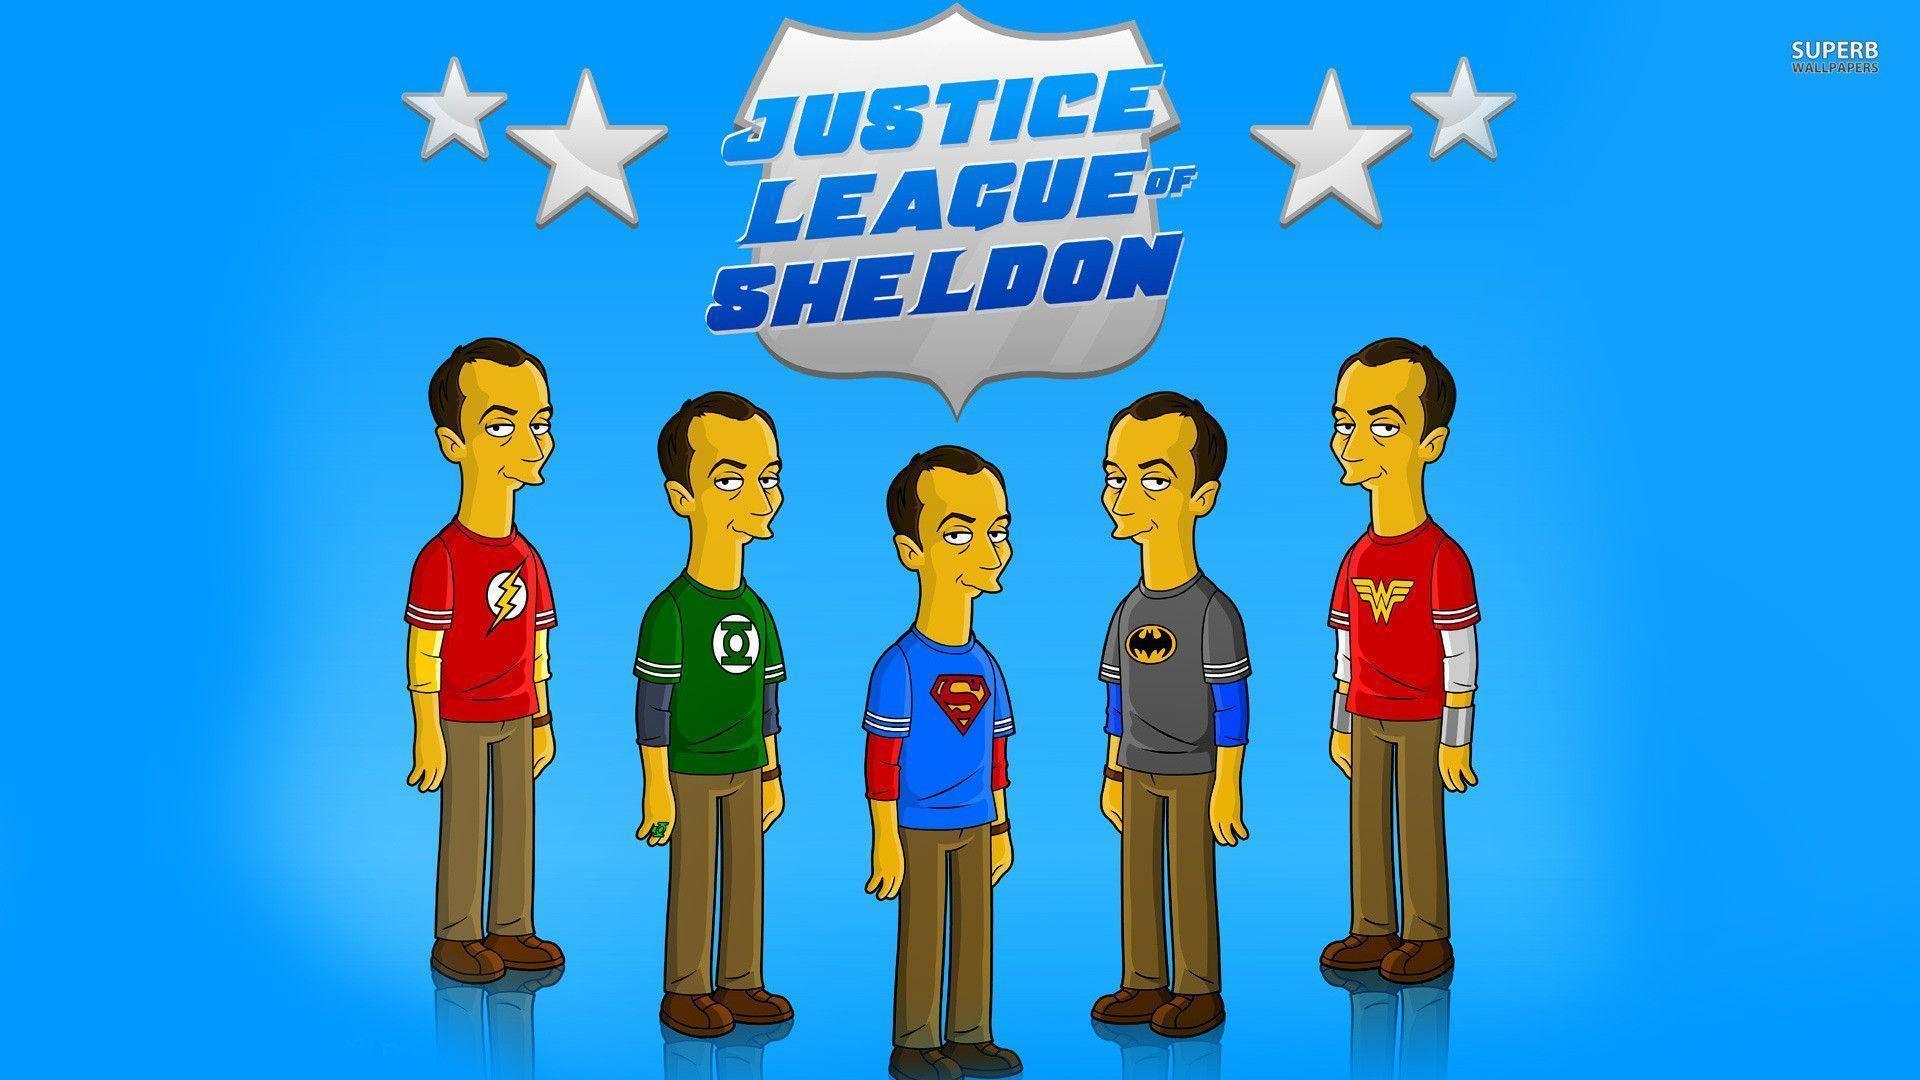 Justice league of Sheldon wallpaper wallpaper - #